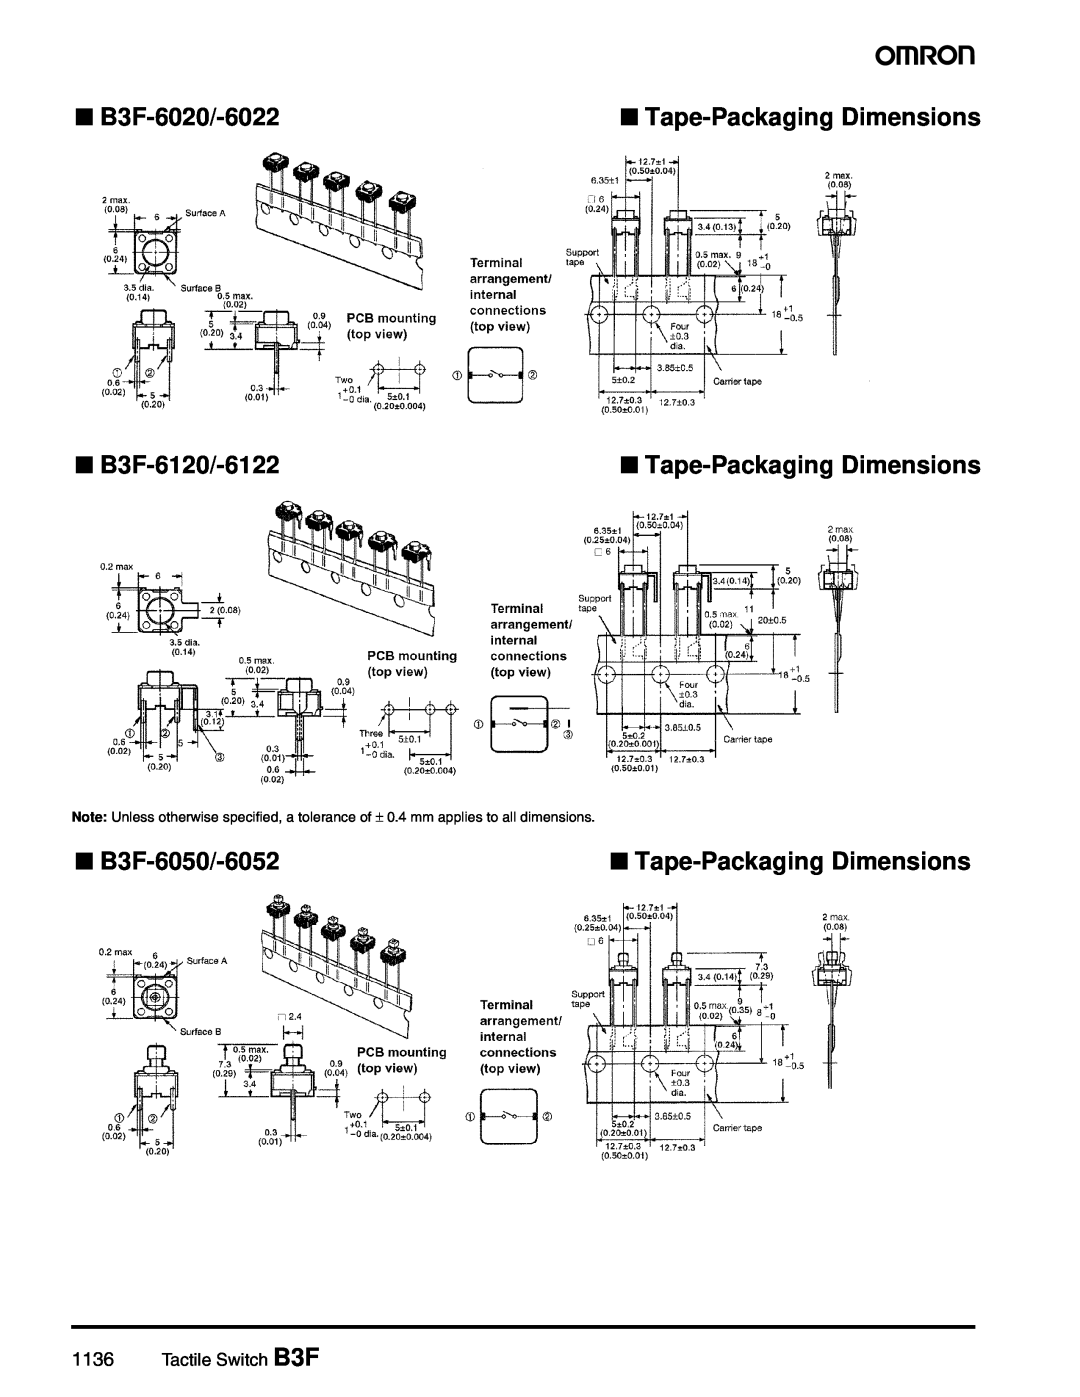 Omron manual B3F-6020/-6022, B3F-6120/-6122, B3F-6050/-6052, Tactile Switch B3F, Tape-Packaging Dimensions 